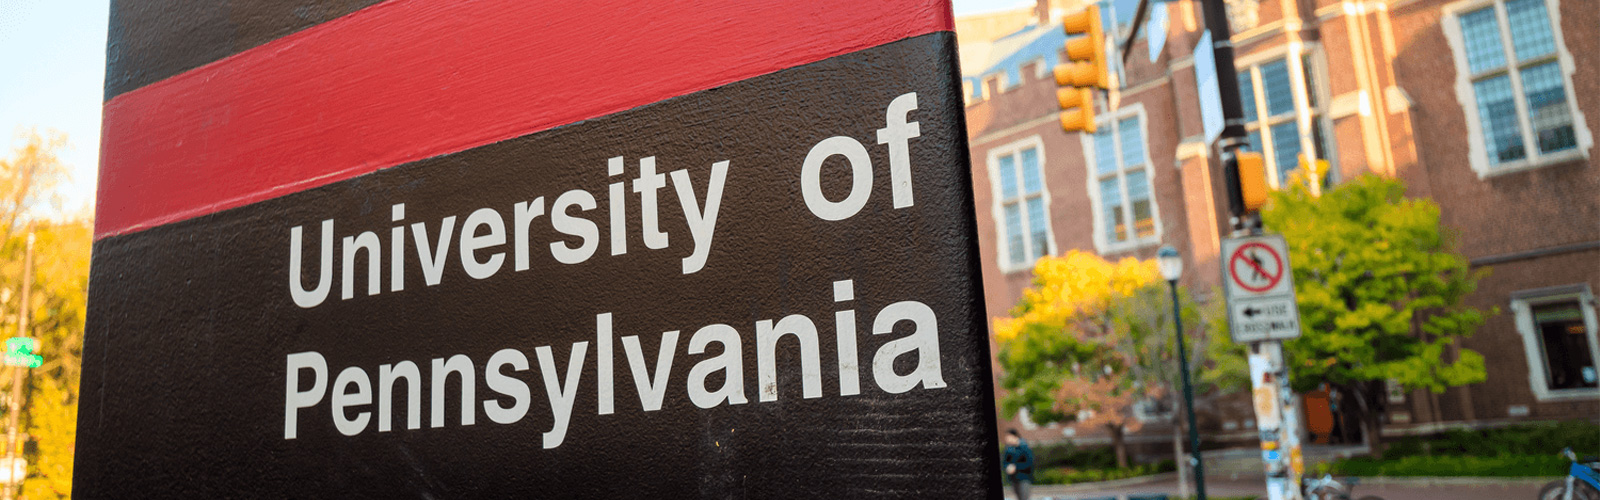 University of Pennsylvania Dental School Invests in Livestreaming Education